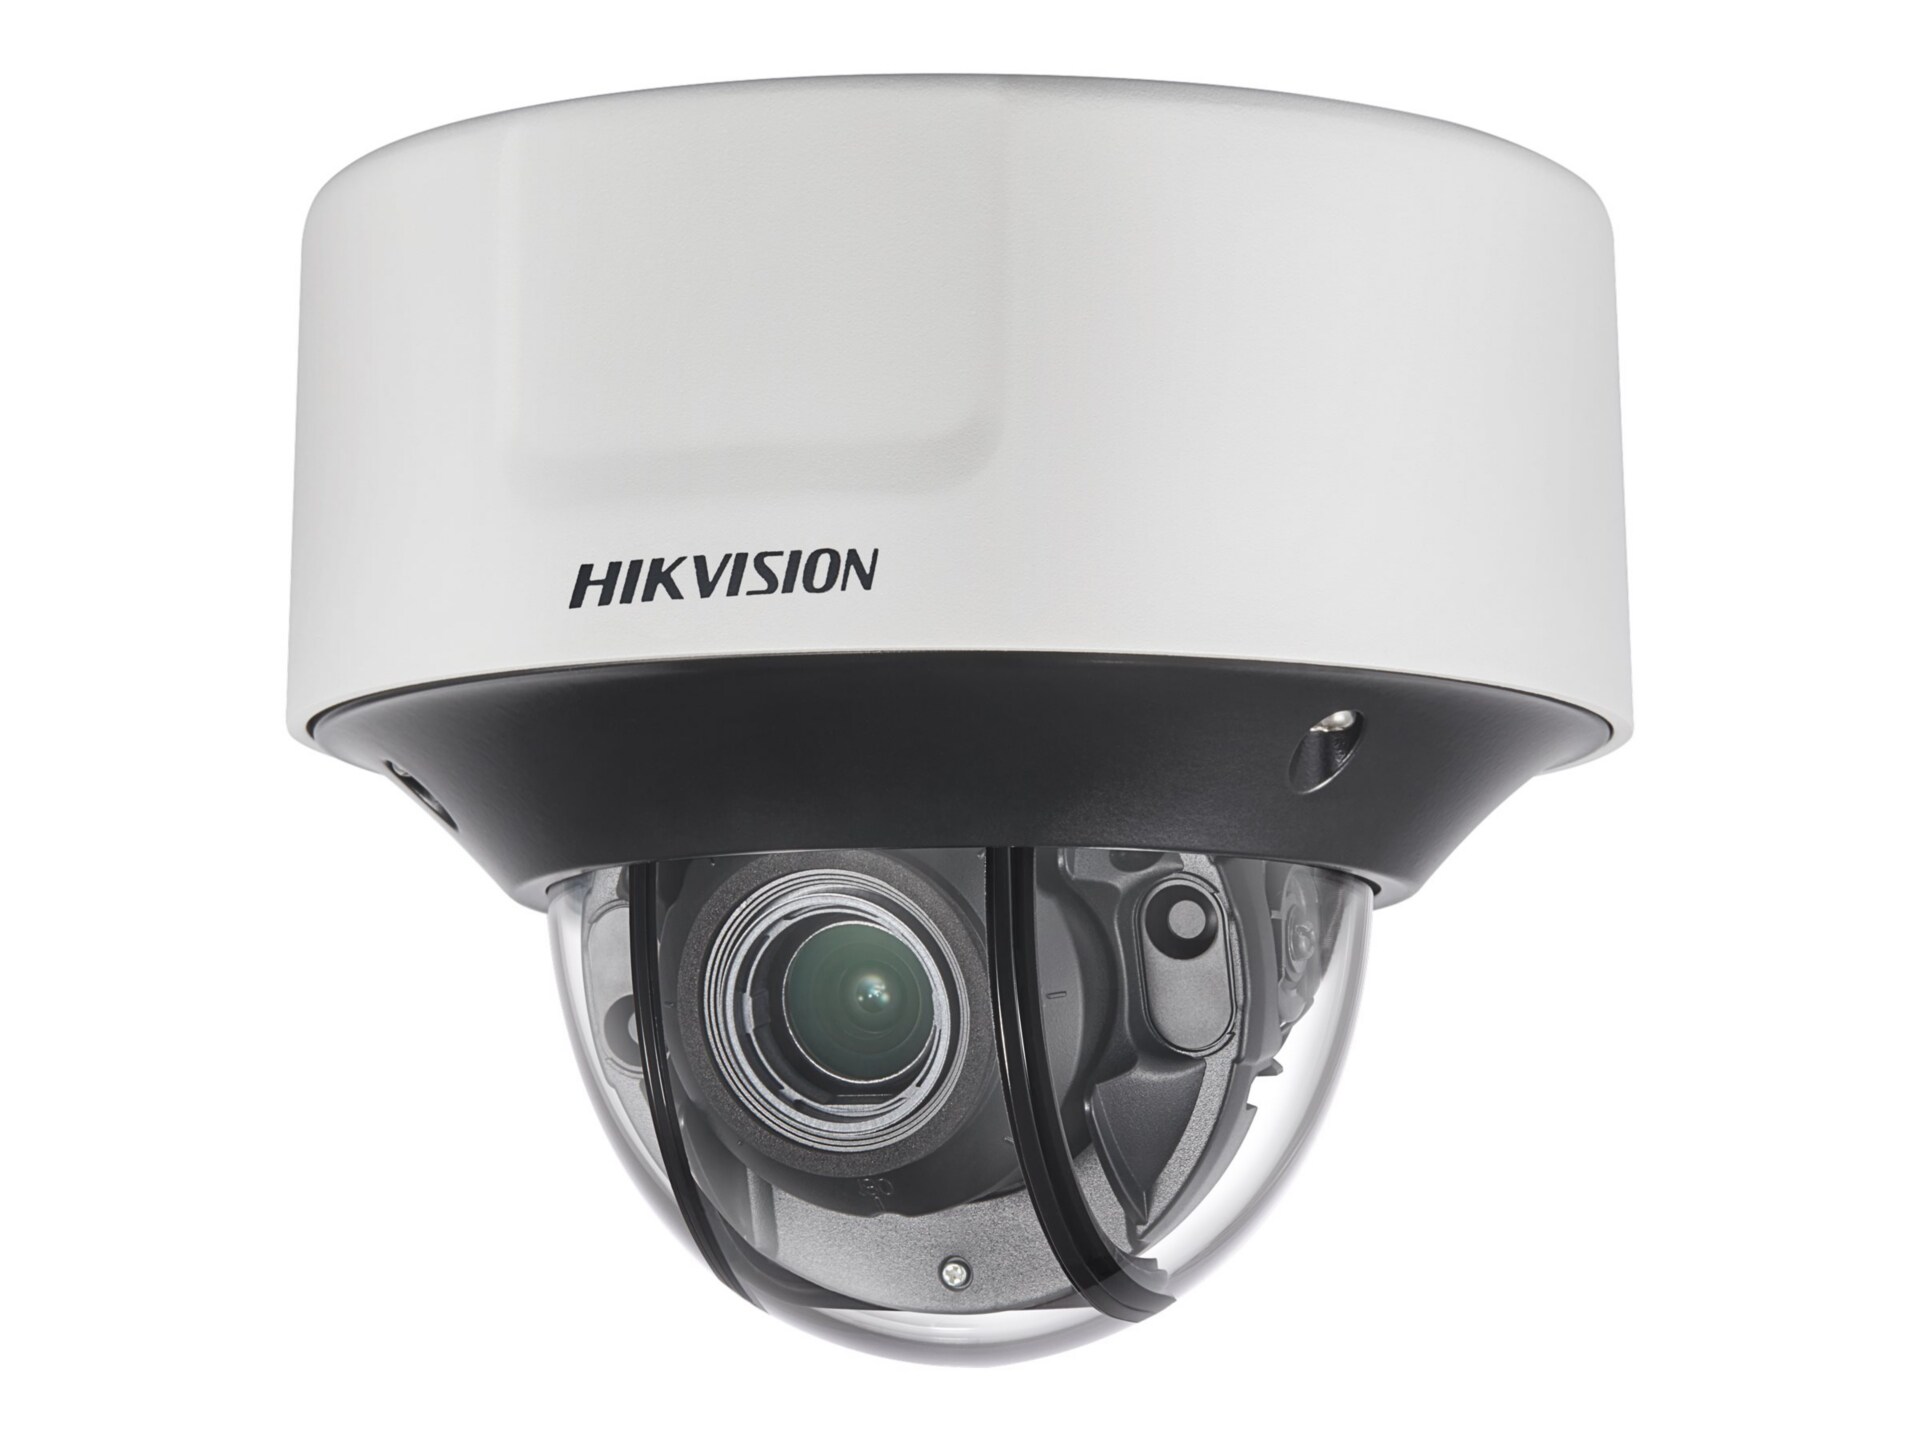 Hikvision Dark Fighter Series DS-2CD5546G0-IZHS - network surveillance came